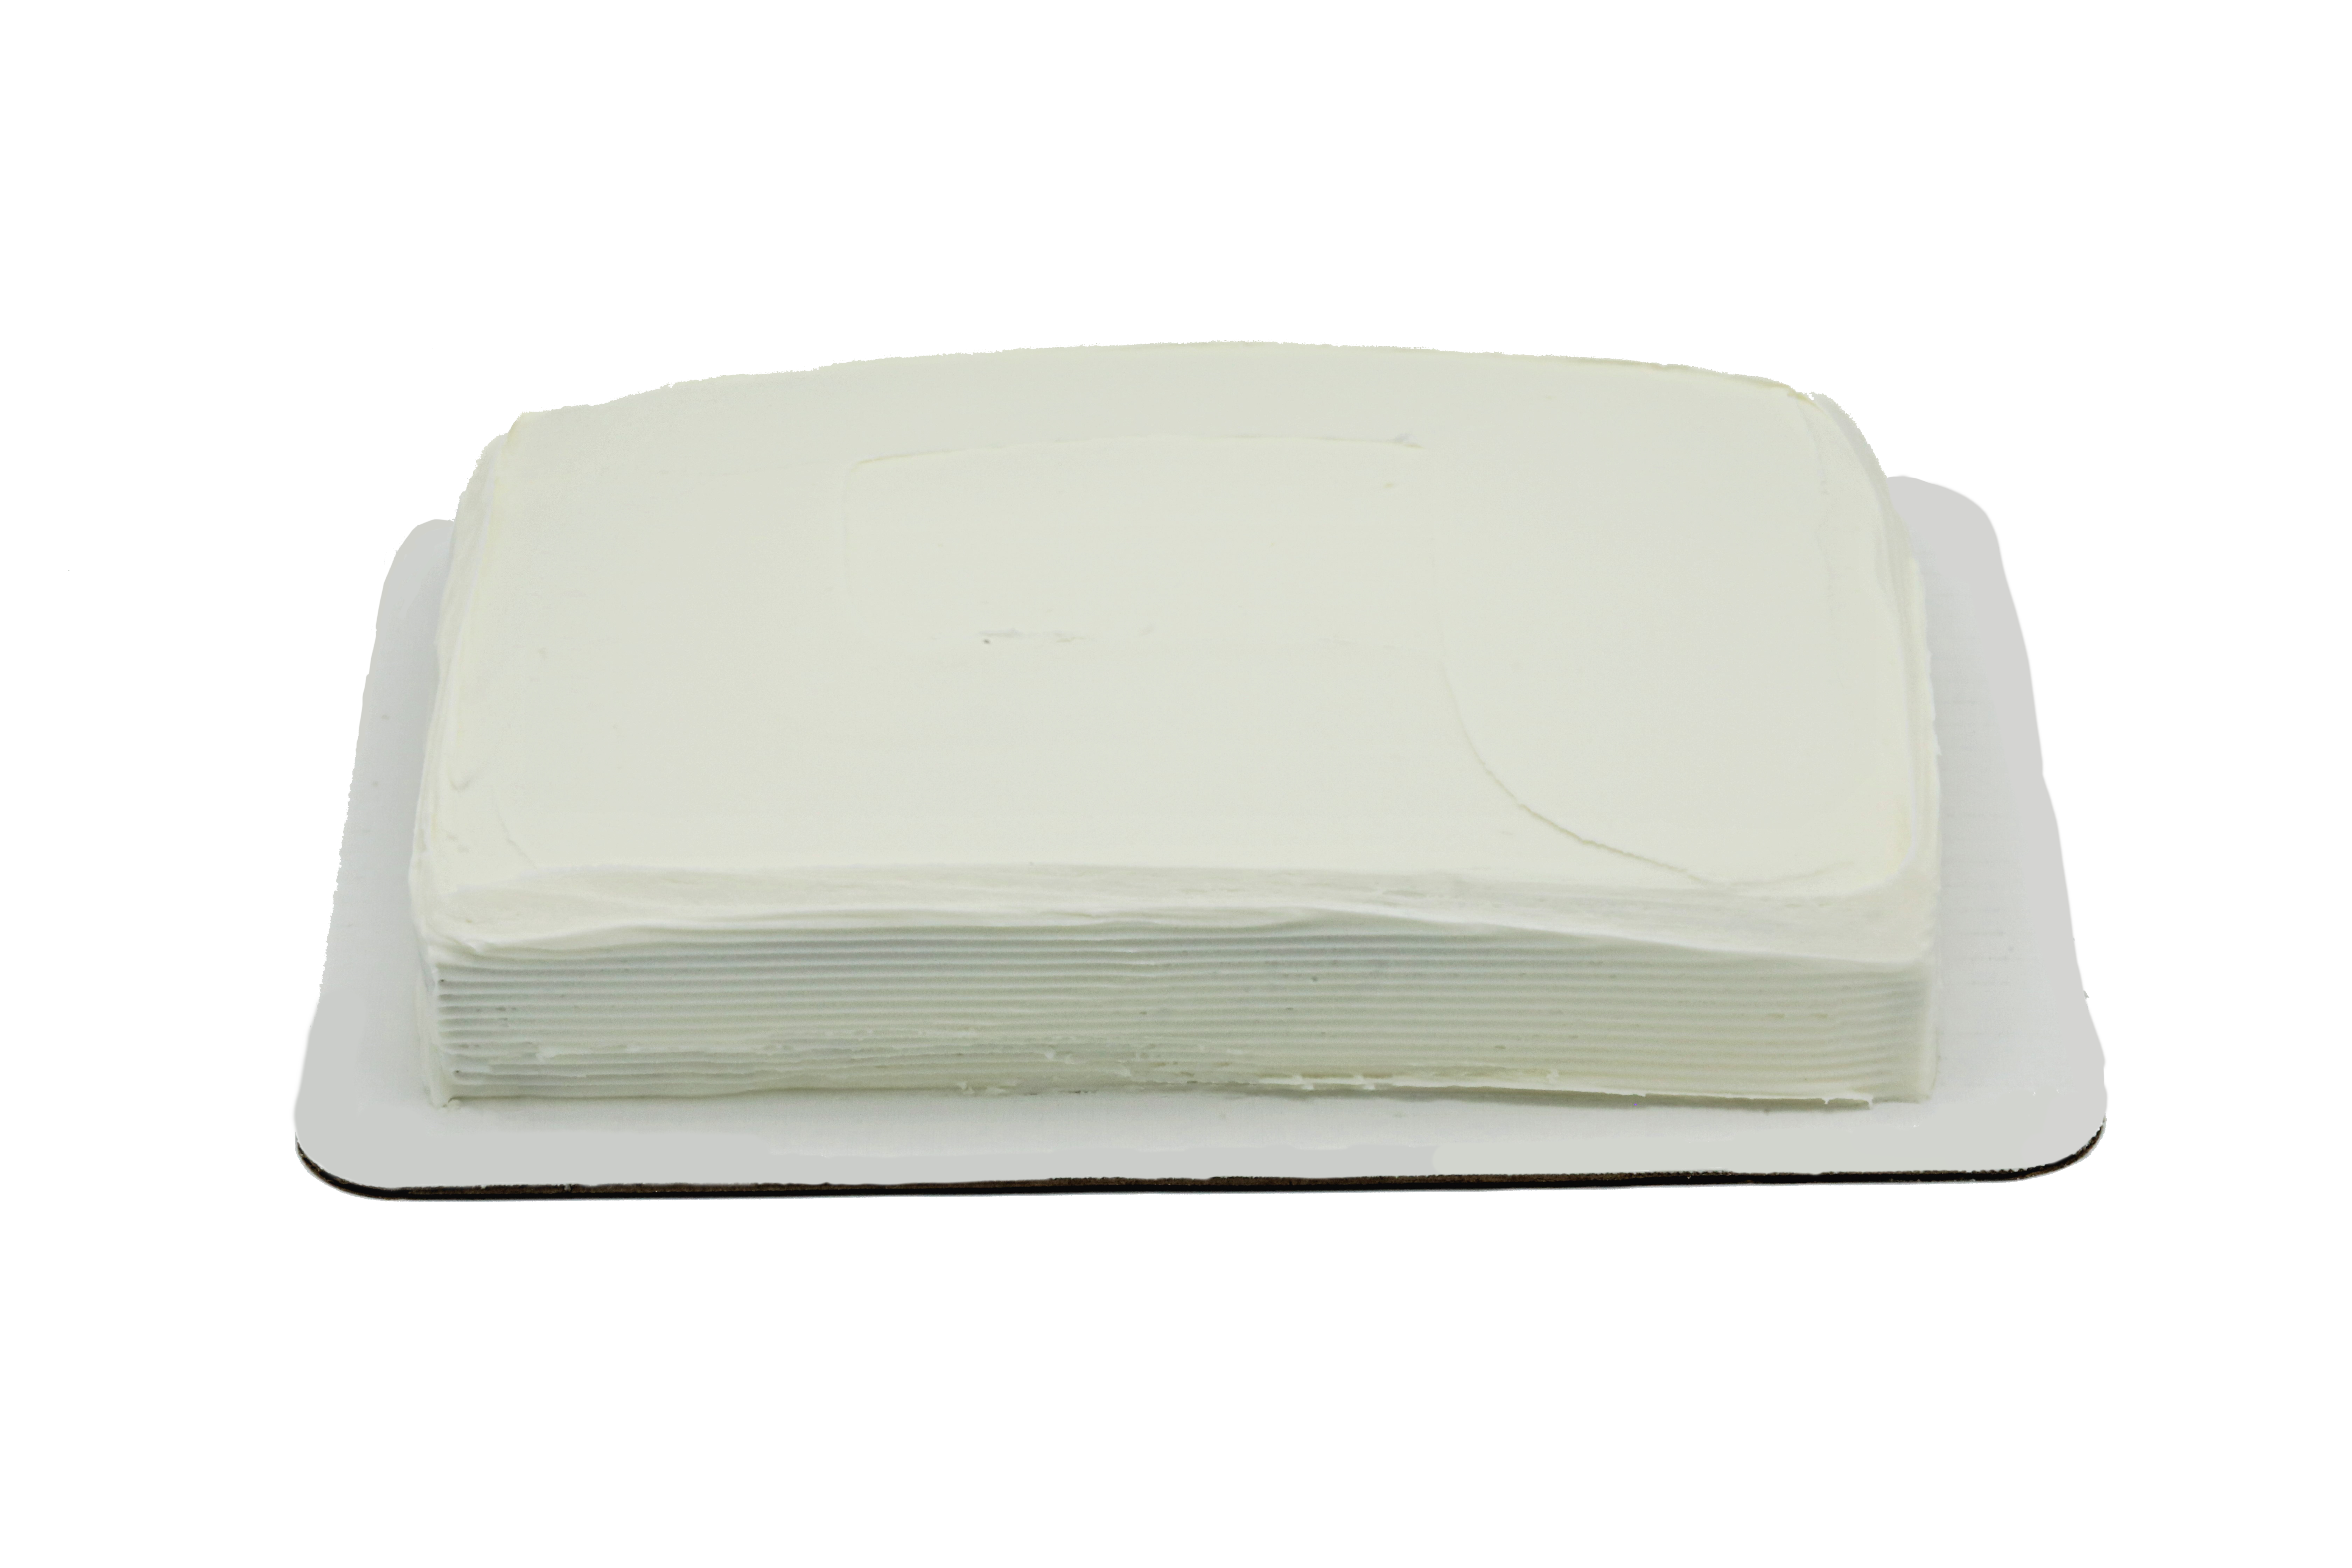 White iced rectangle cake